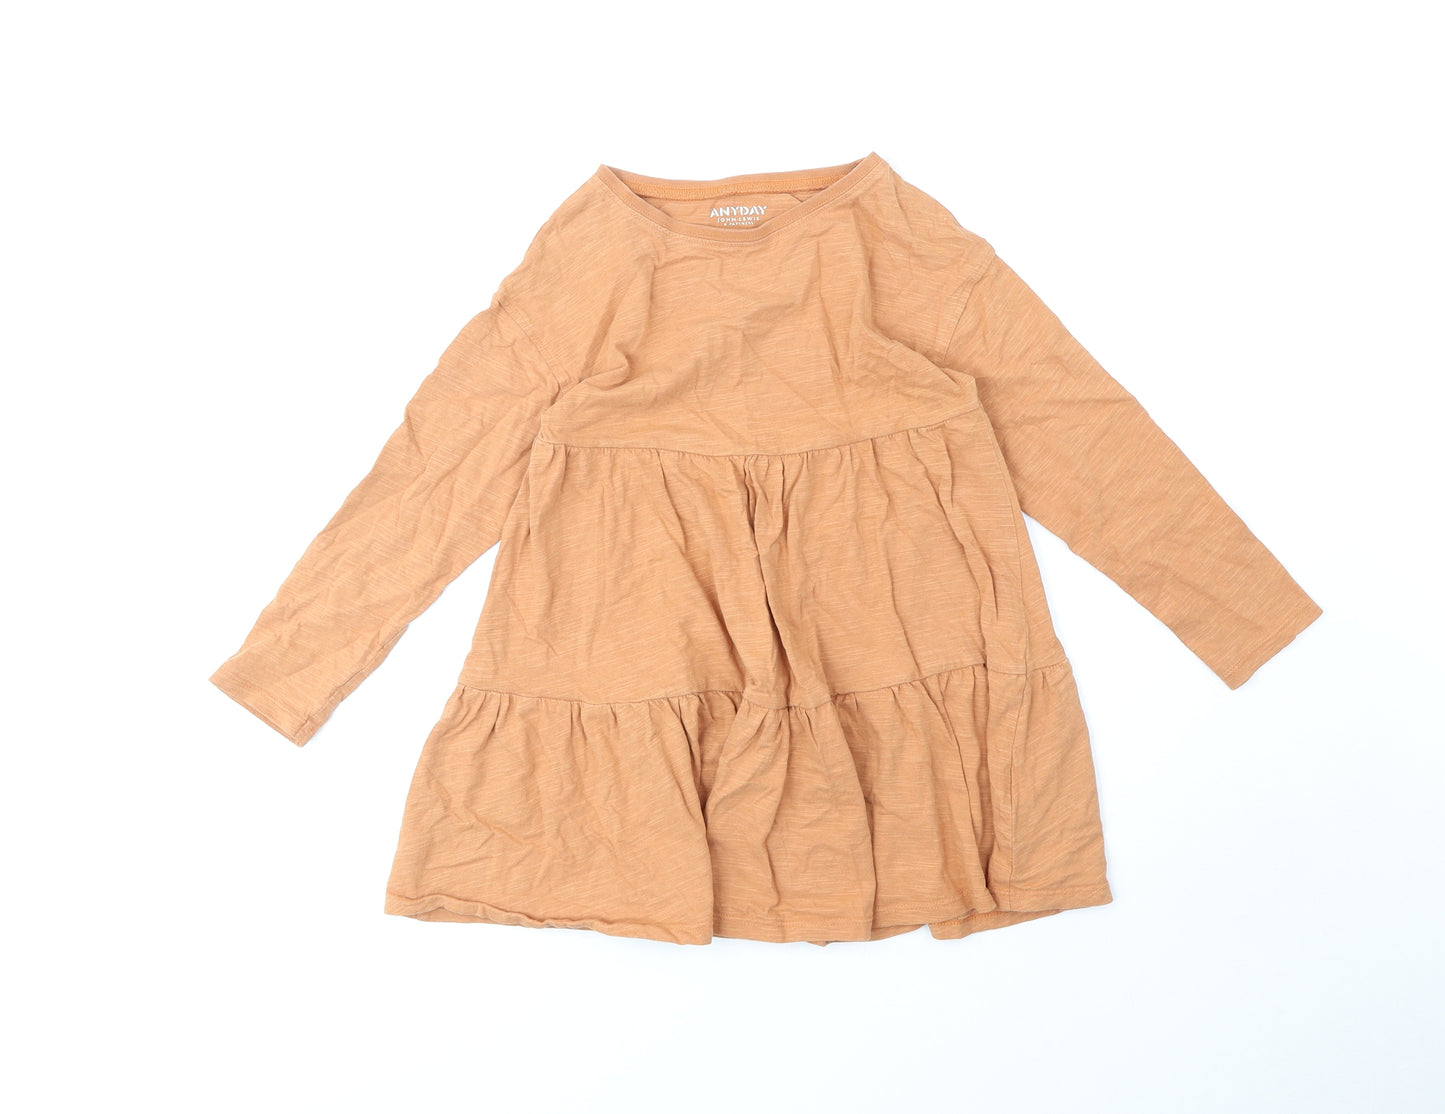 John Lewis Girls Orange Cotton T-Shirt Dress Size 7 Years Round Neck Pullover